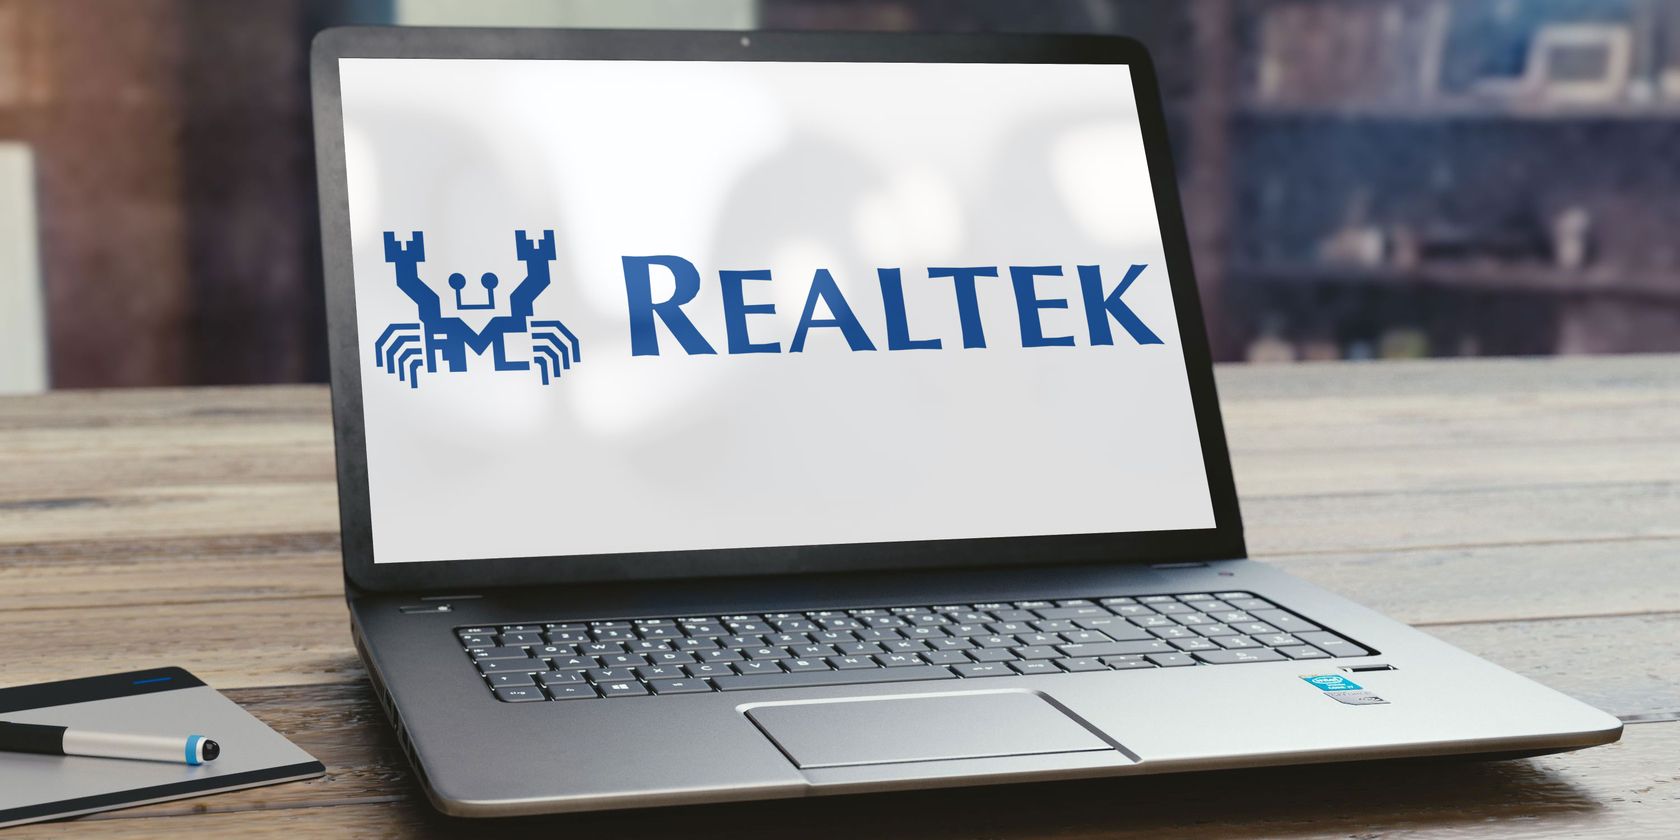 Realtek logo on Windows laptop